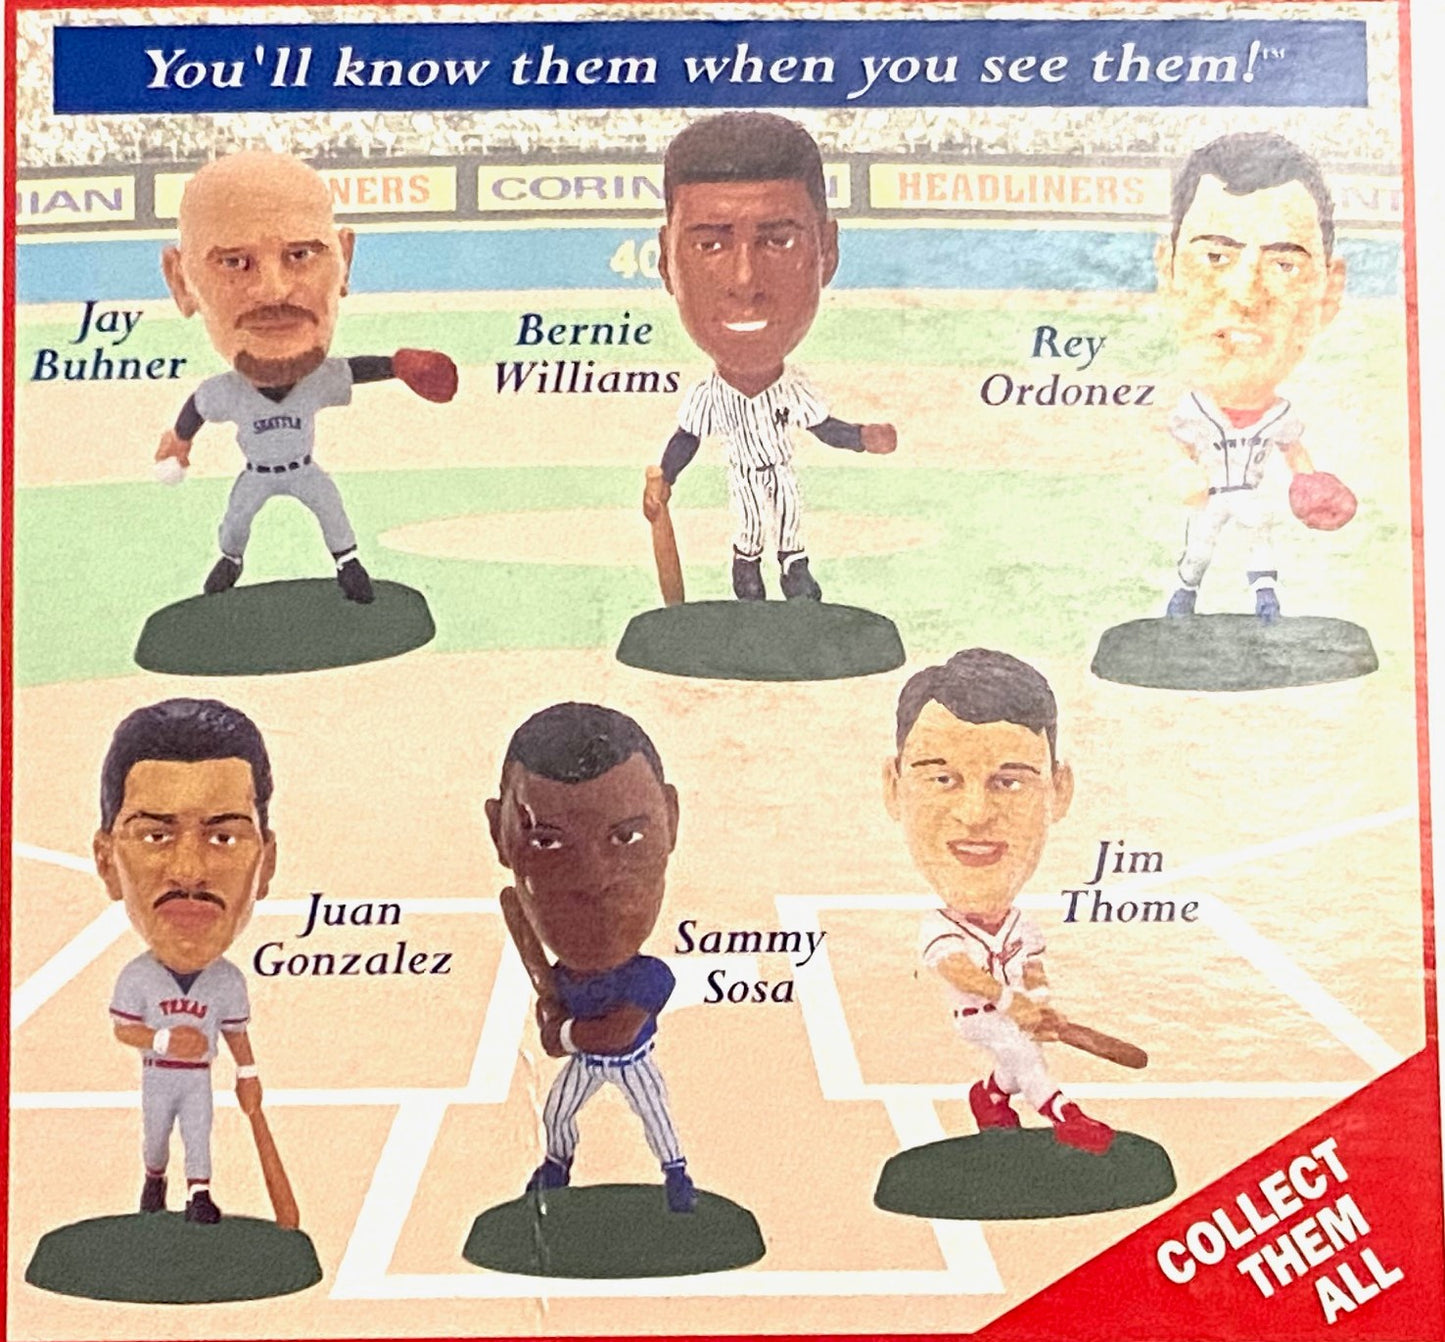 Eric Karros 1998 MLB Los Angeles Dodgers Headliner Figurine by Corinthian